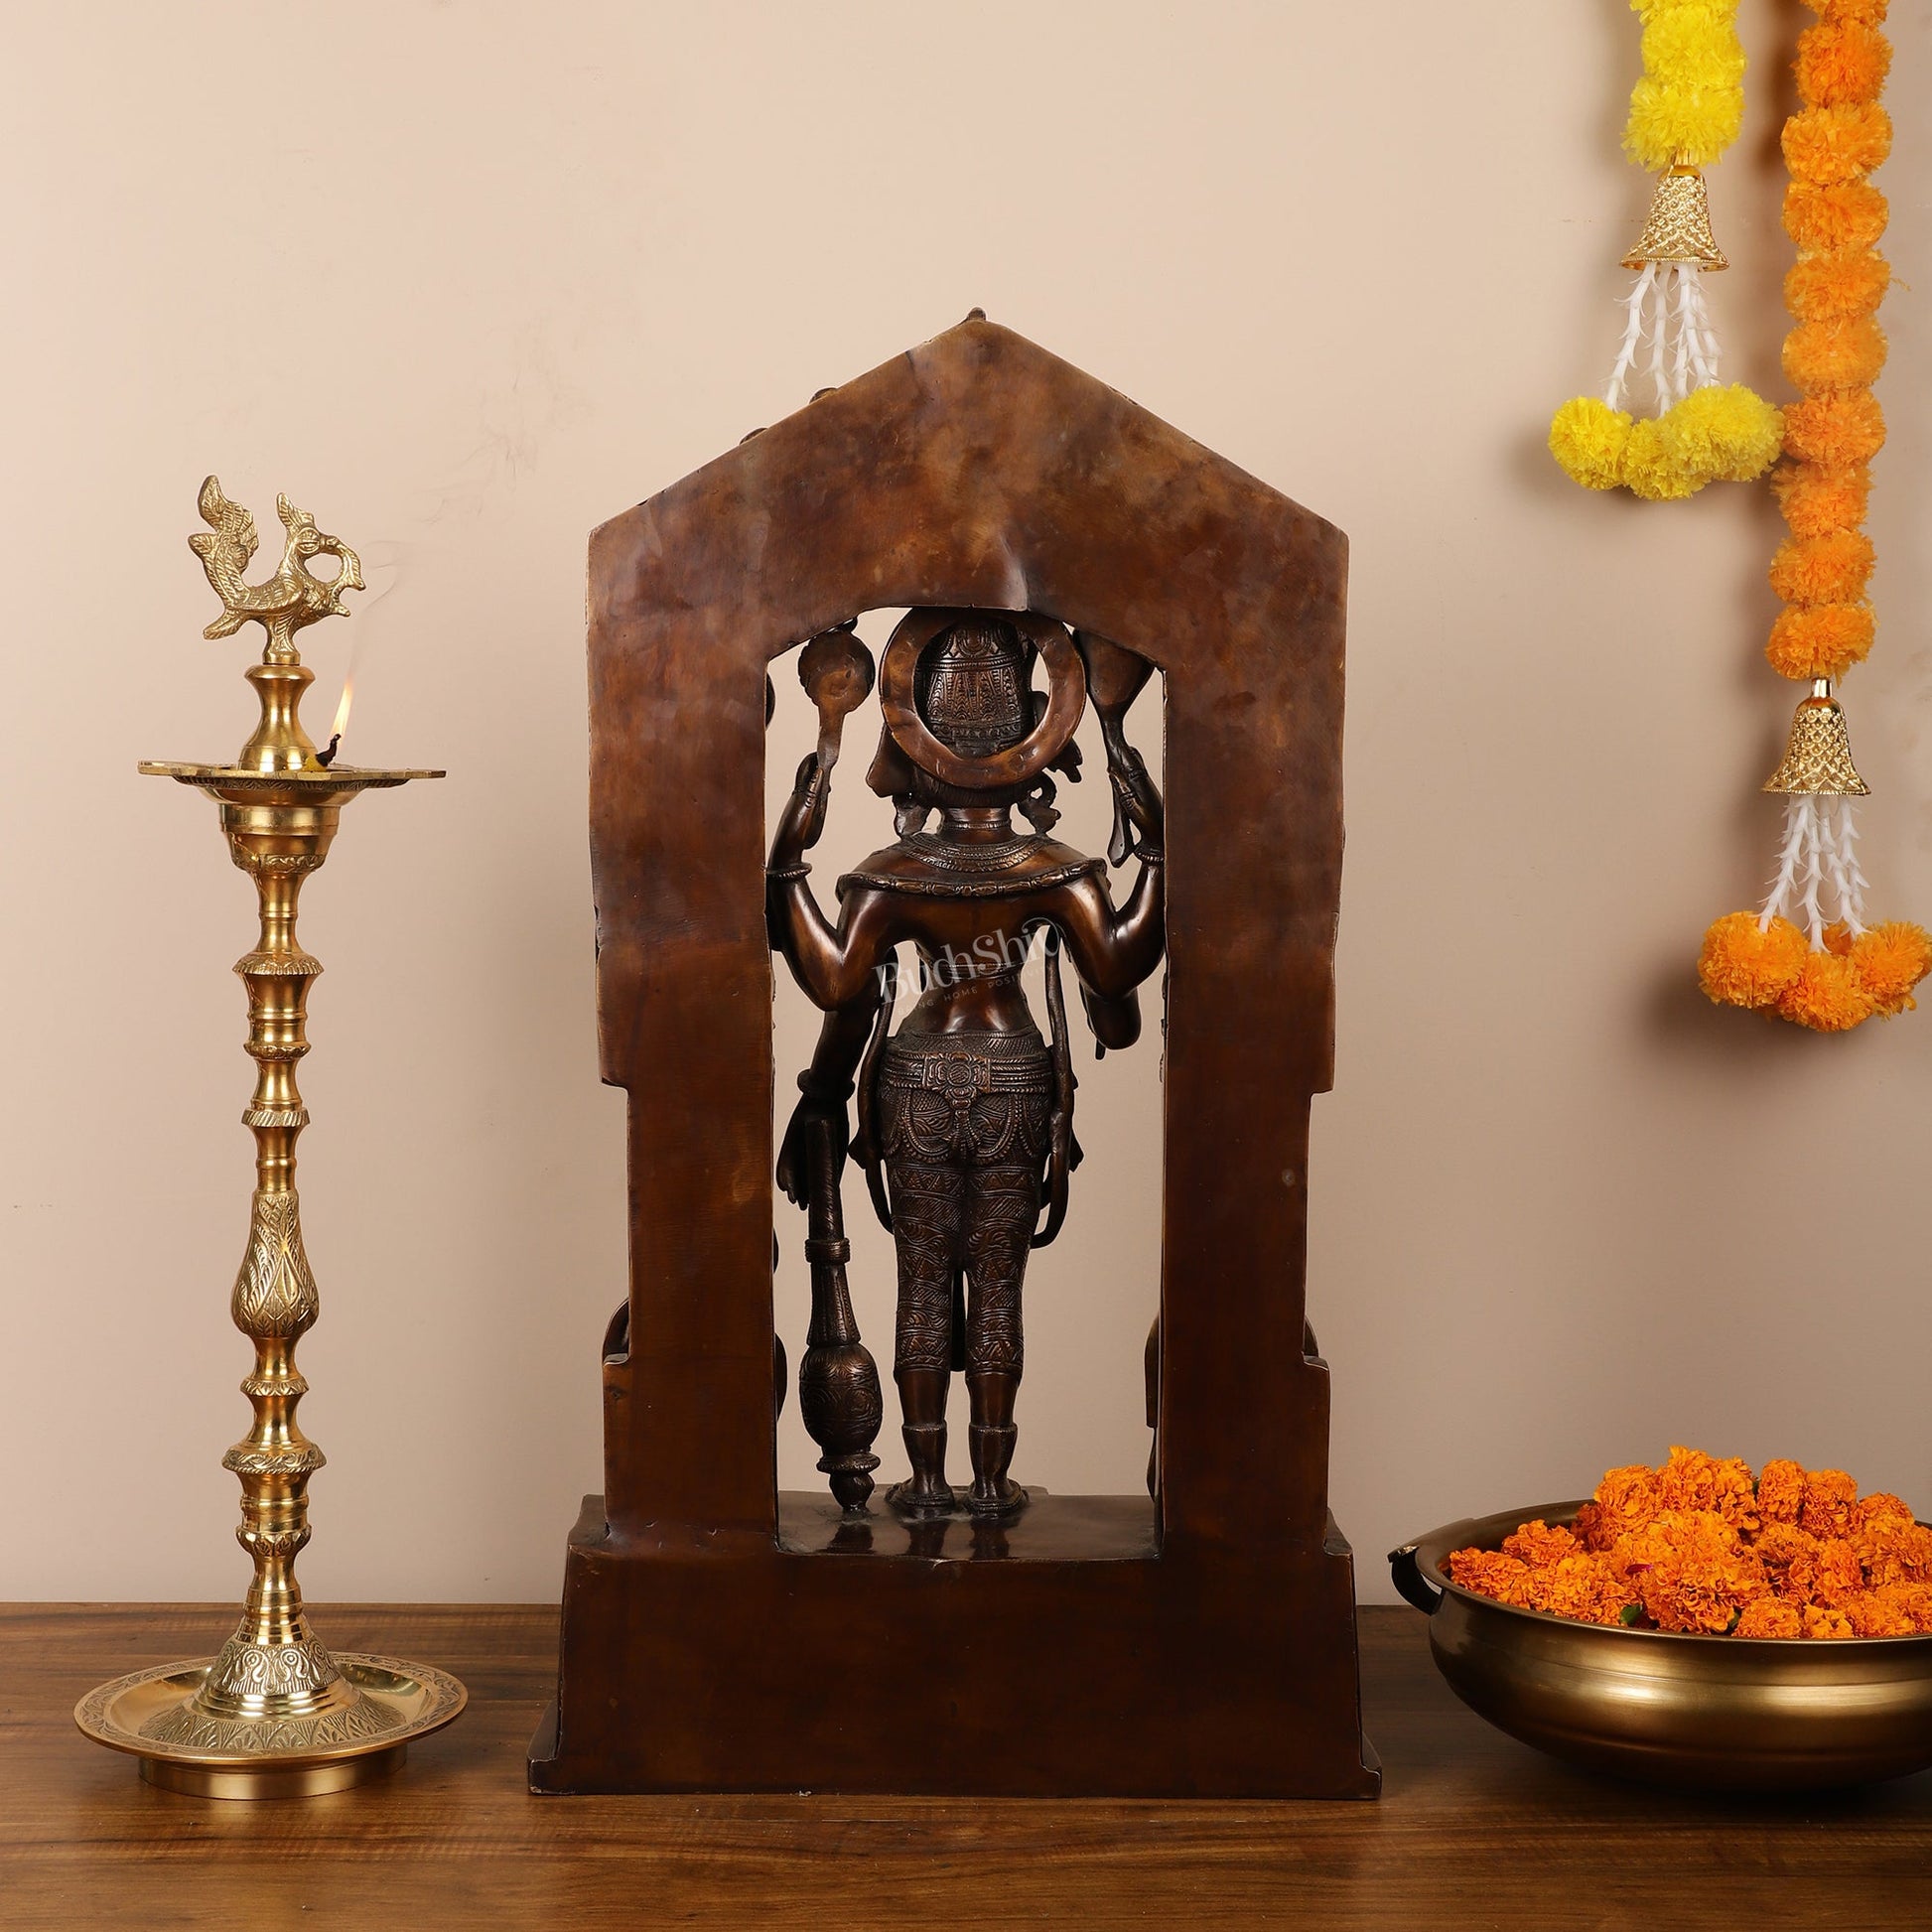 Brass Superfine Lord Vishnu Statue with Frame and Bhudevi Sridevi - 29 Inch - Budhshiv.com